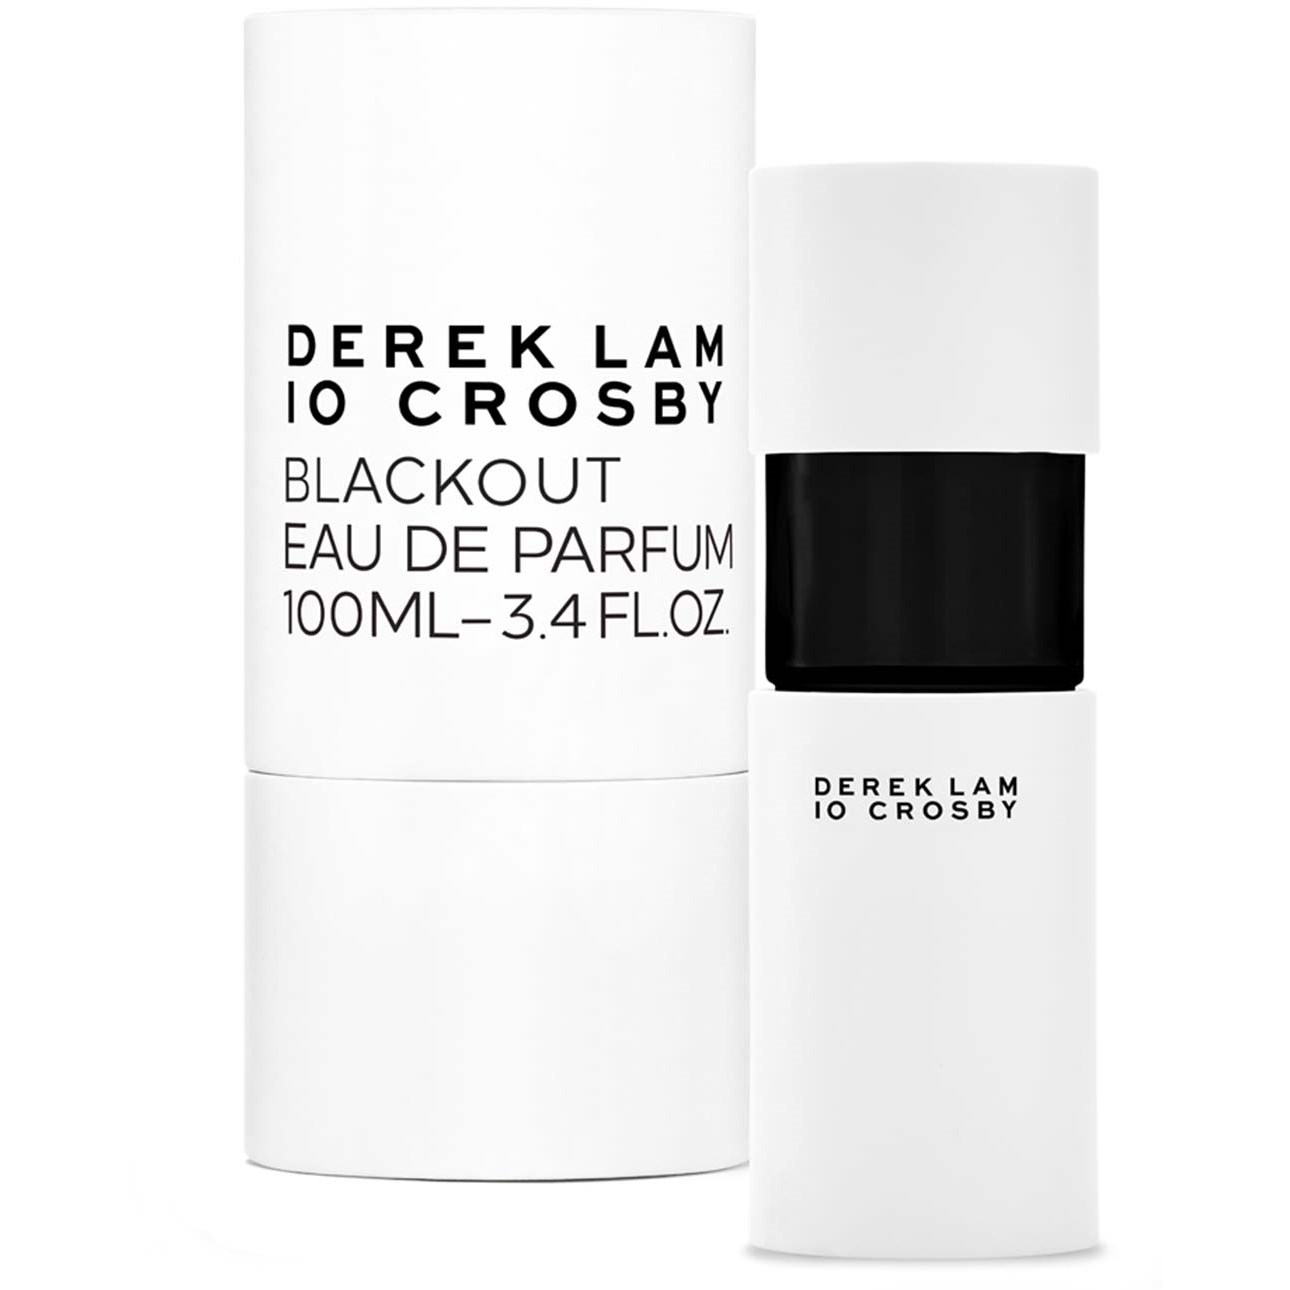 Läs mer om Derek Lam 10 Crosby Blackout Eau de Parfum 100 ml